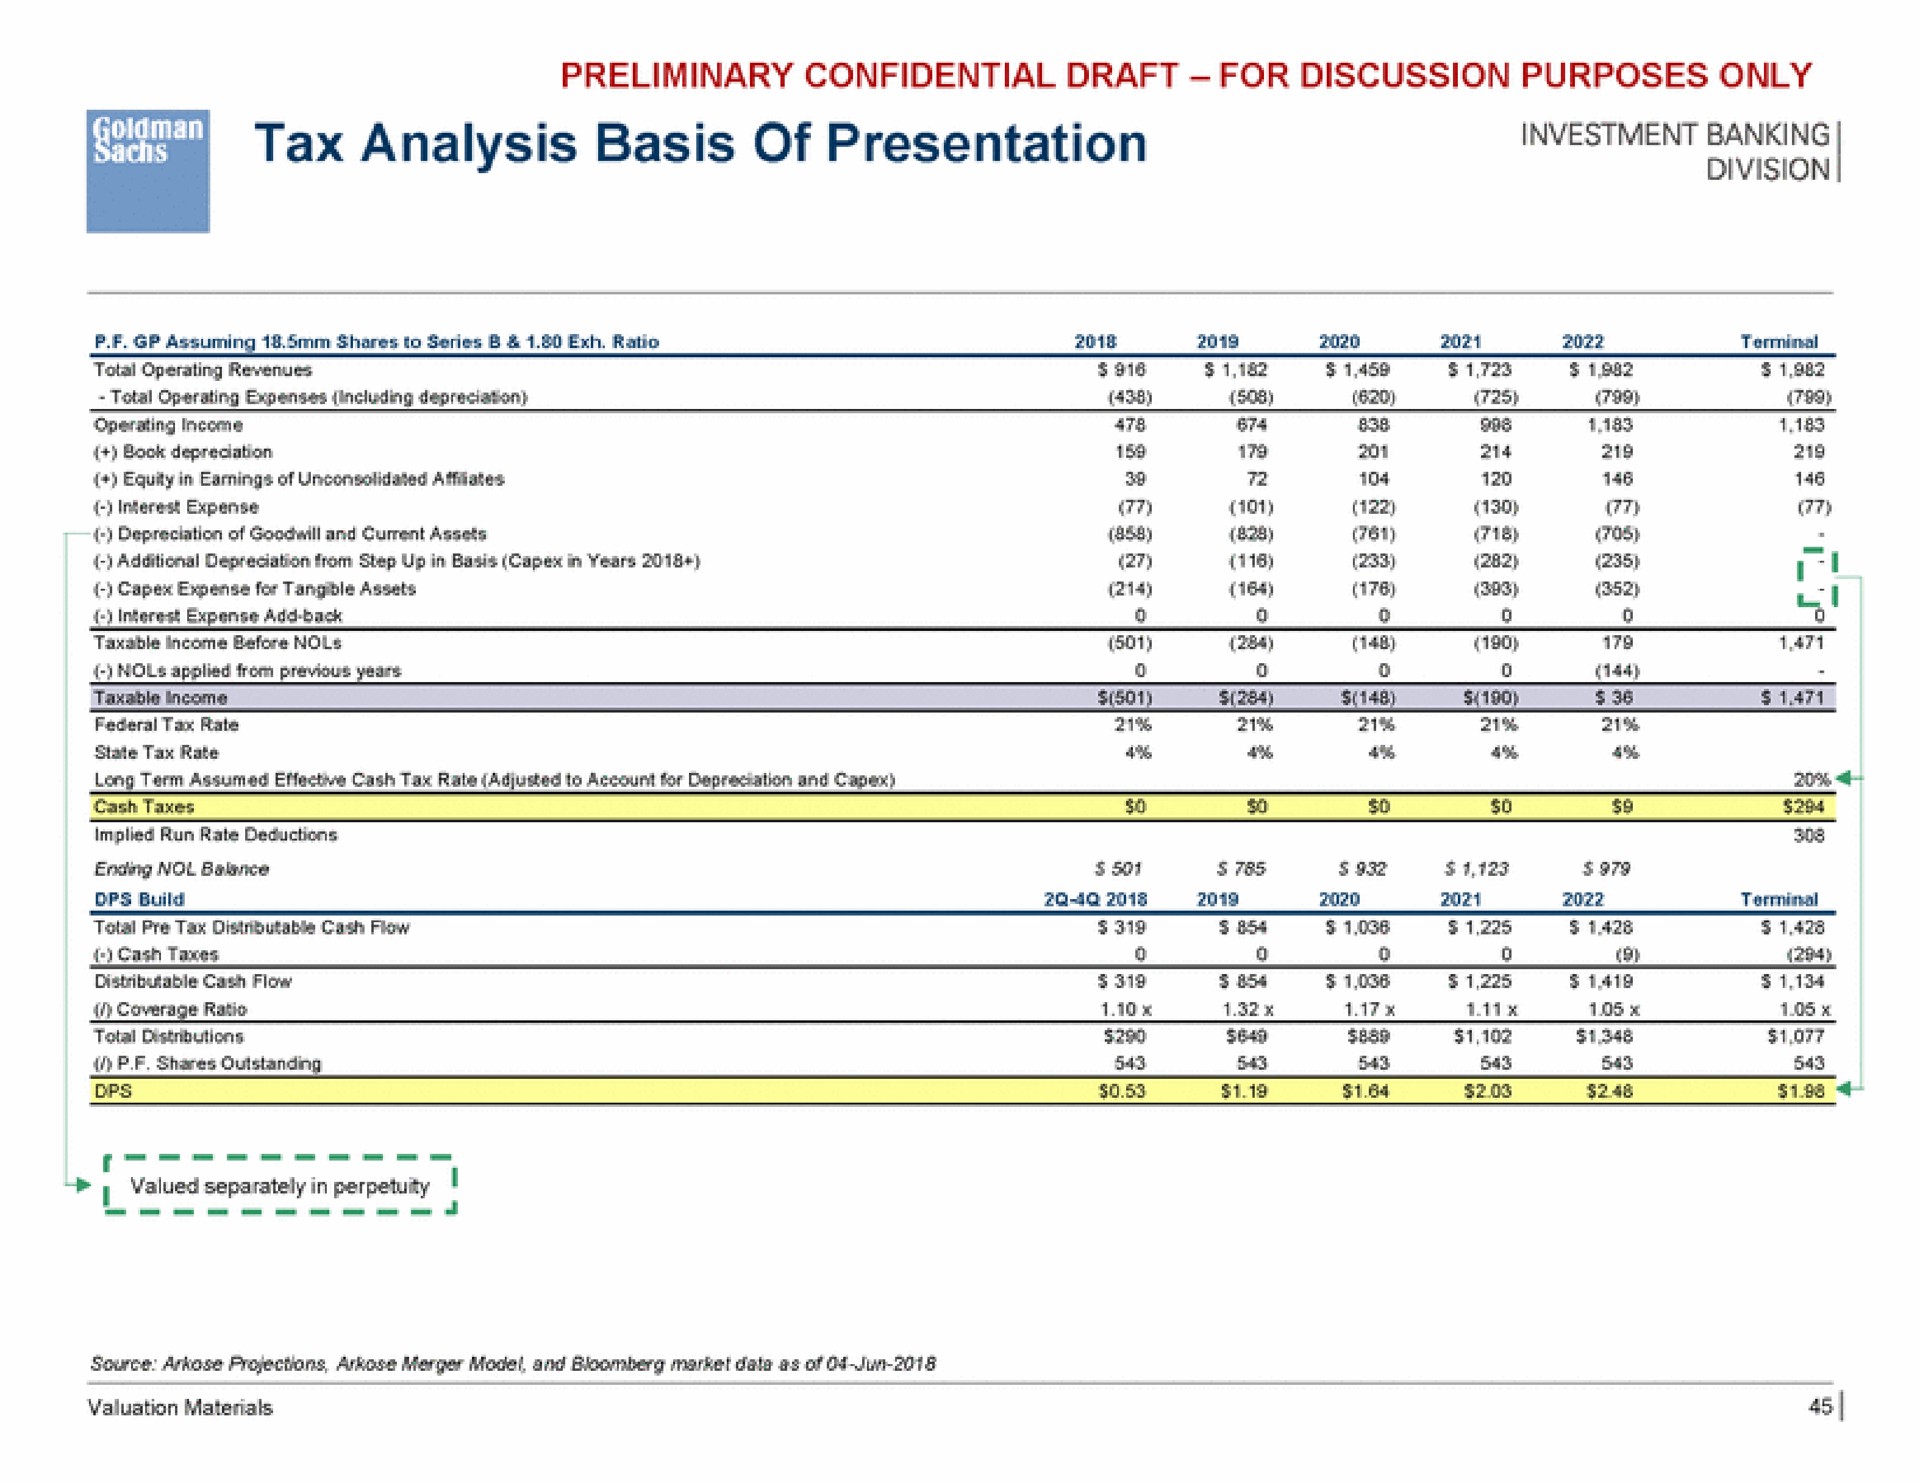 tax analysis basis of presentation | Goldman Sachs